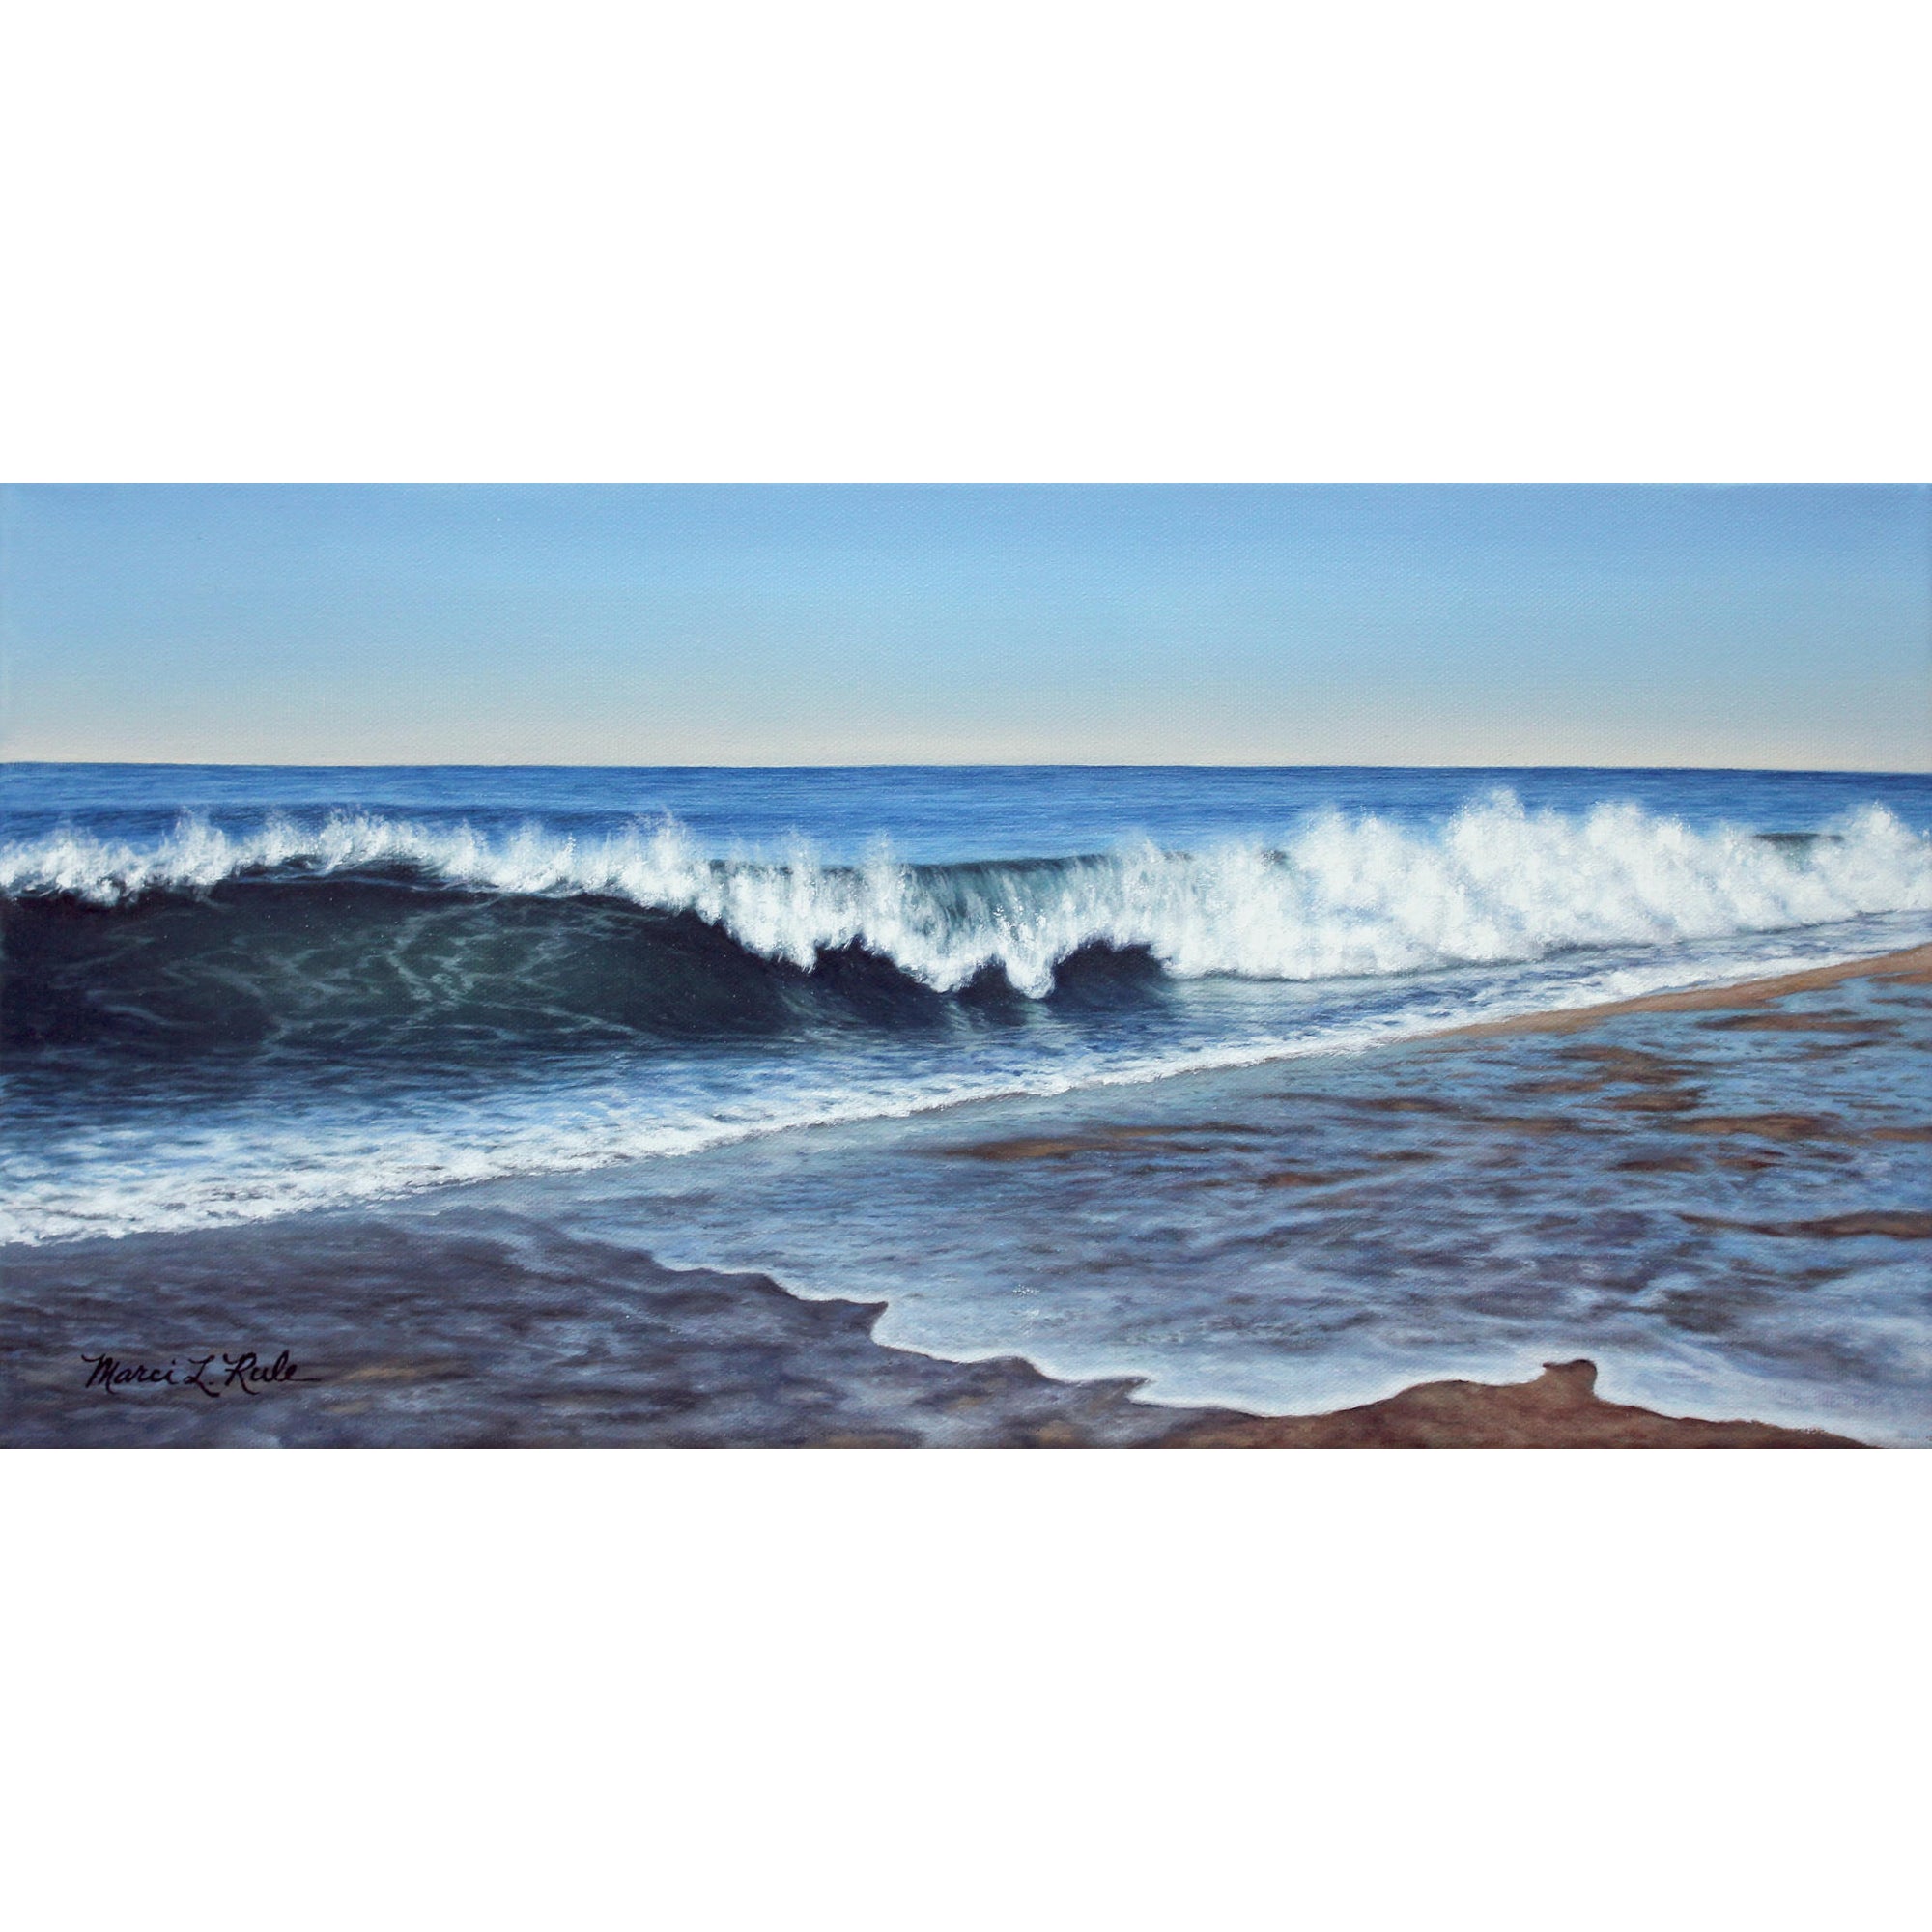 High Tide #1-Coastal Ocean Wave prints